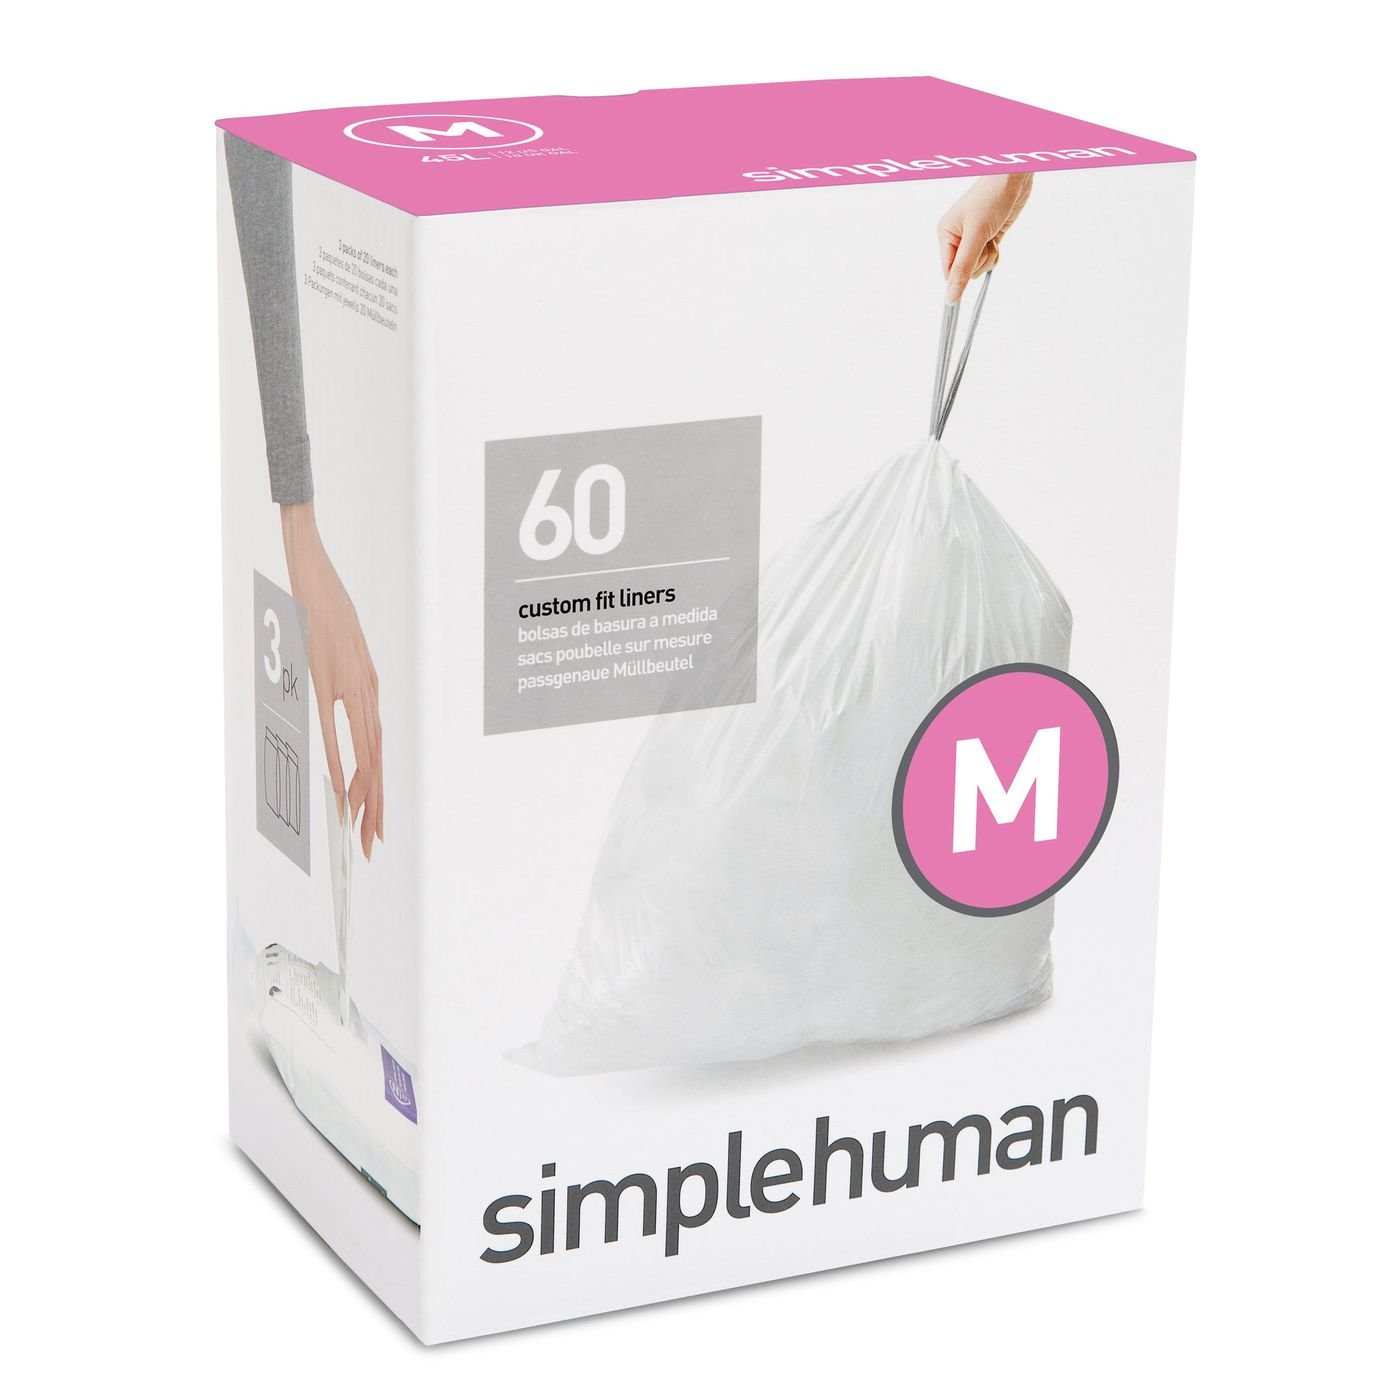 simplehuman Bin Liner Code M x 60 Liners Review